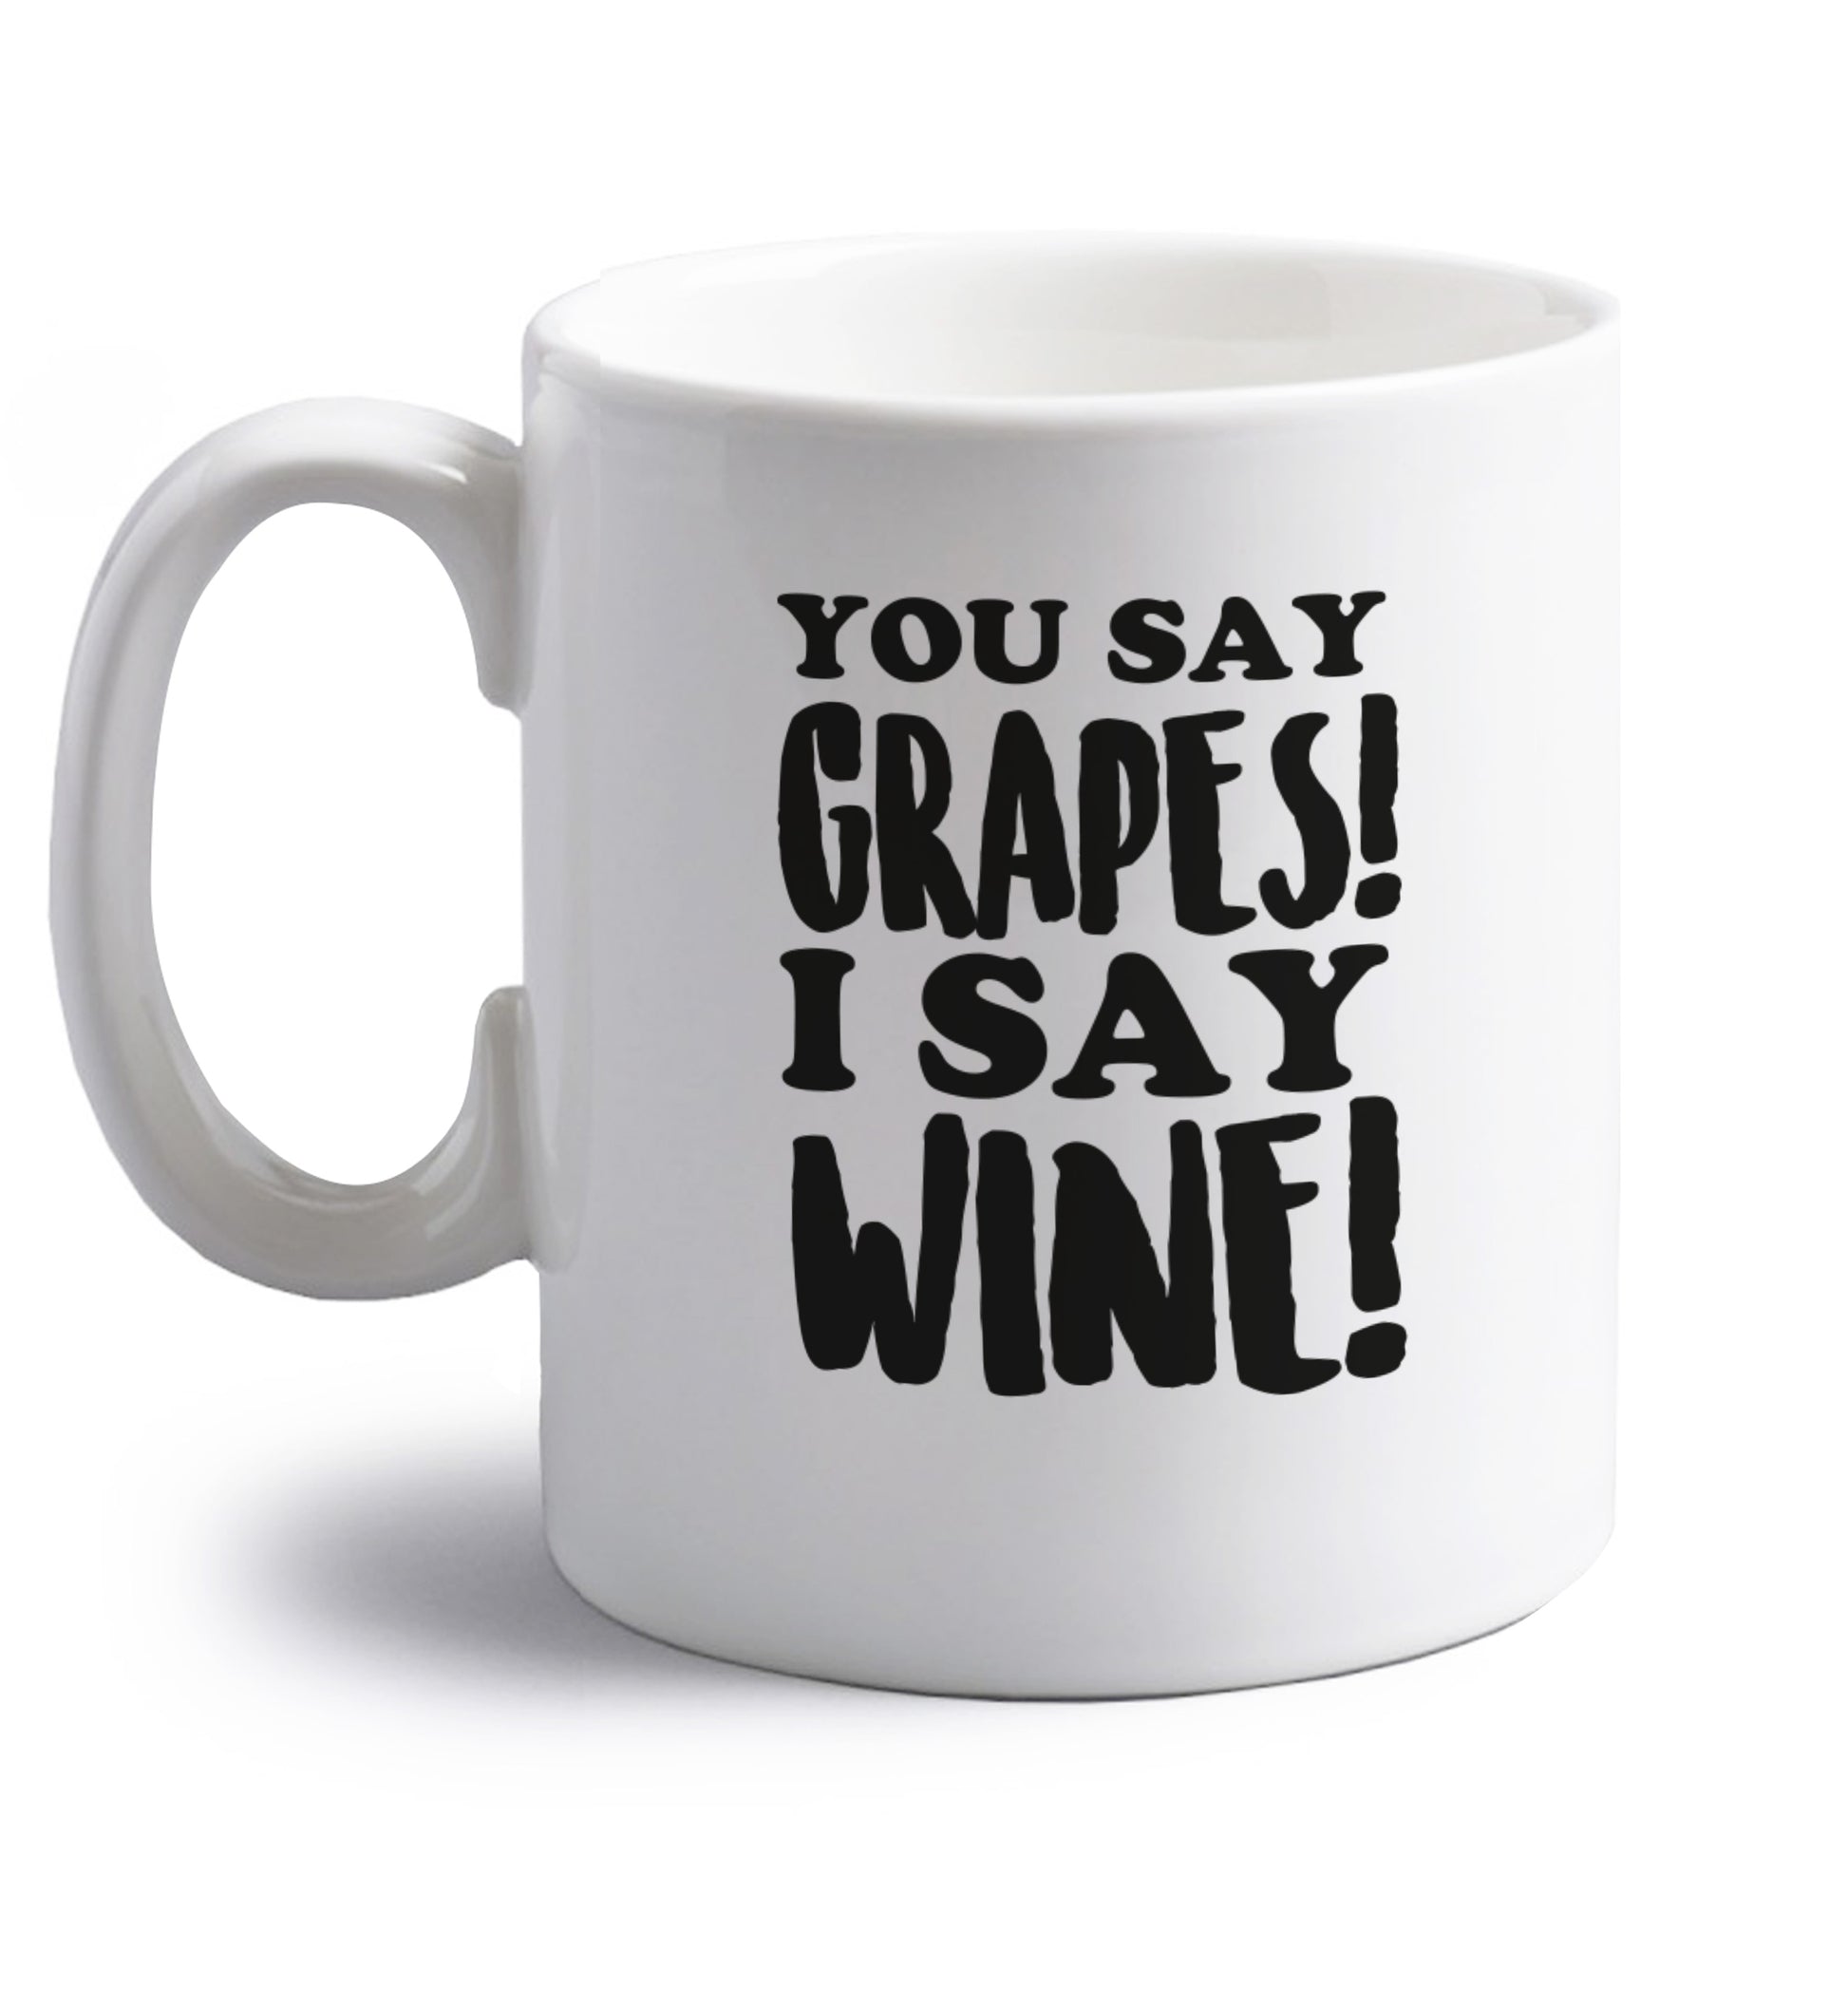 You say grapes I say wine! right handed white ceramic mug 